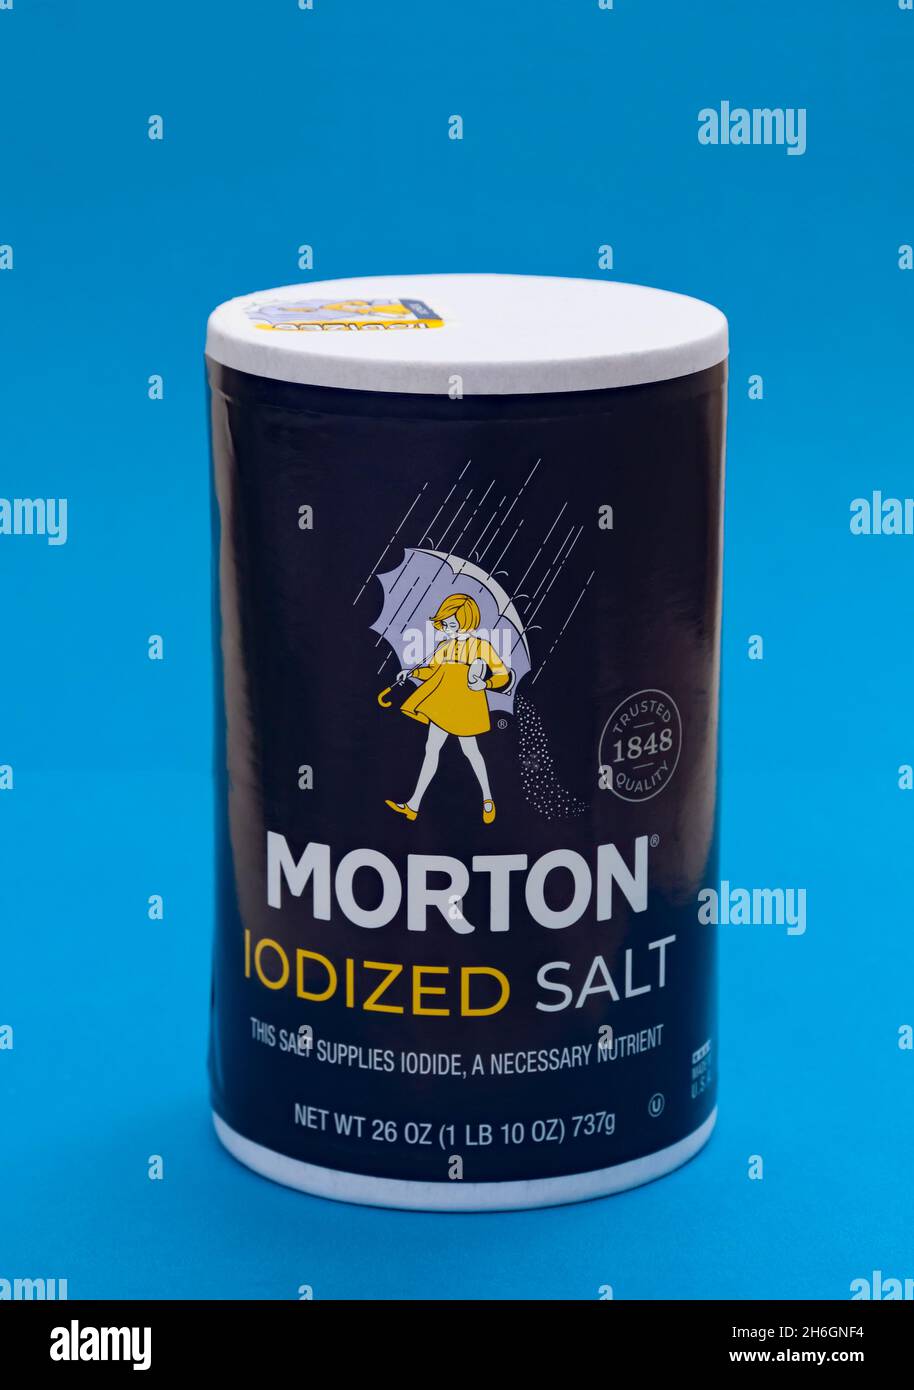 Morton Iodized Salt container. Stock Photo